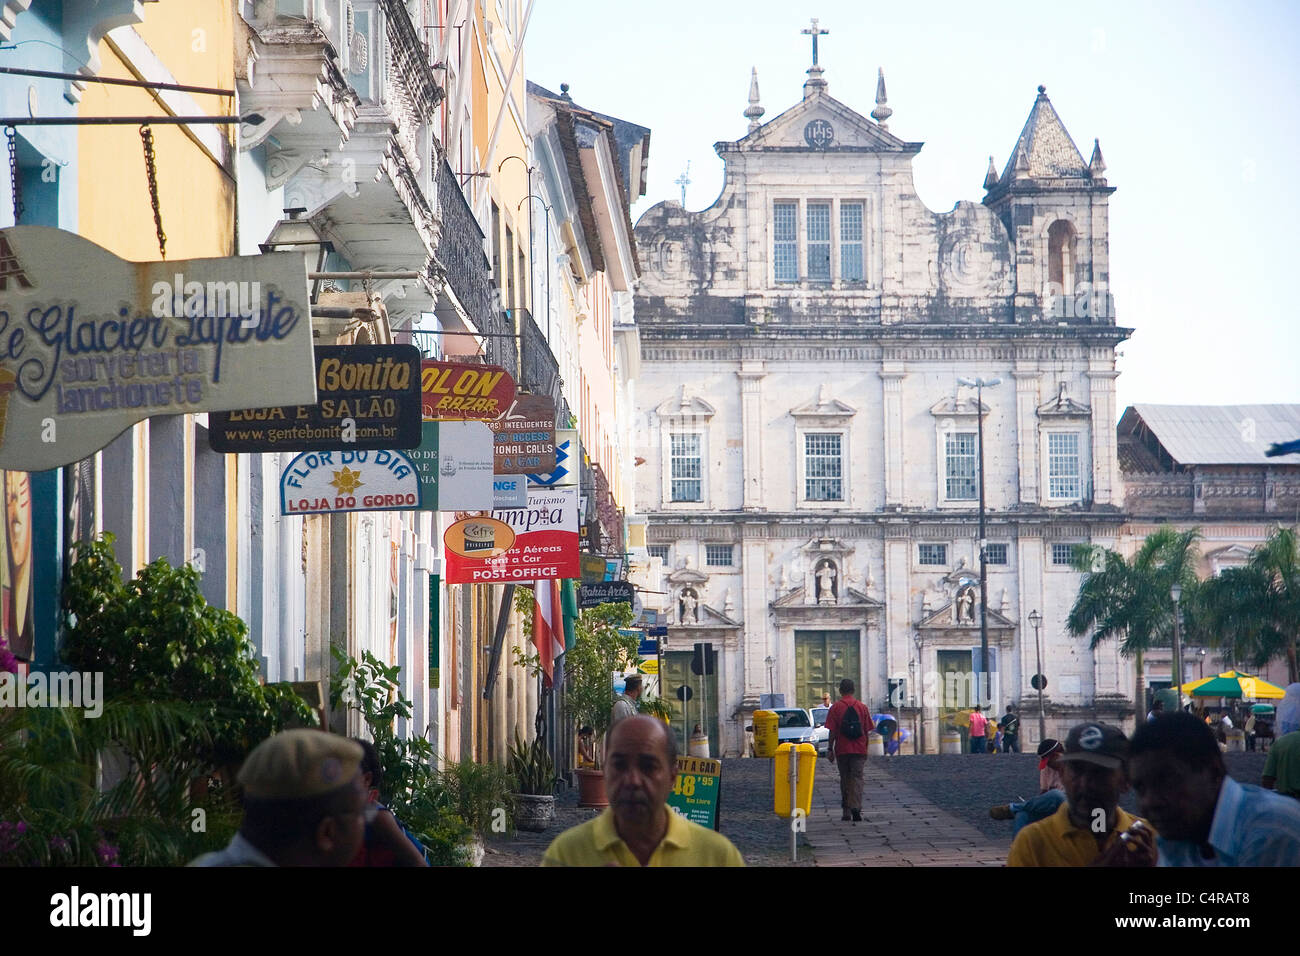 Pelhourino, die Altstadt von Salvador da Bahia, Brasilien Stockfoto